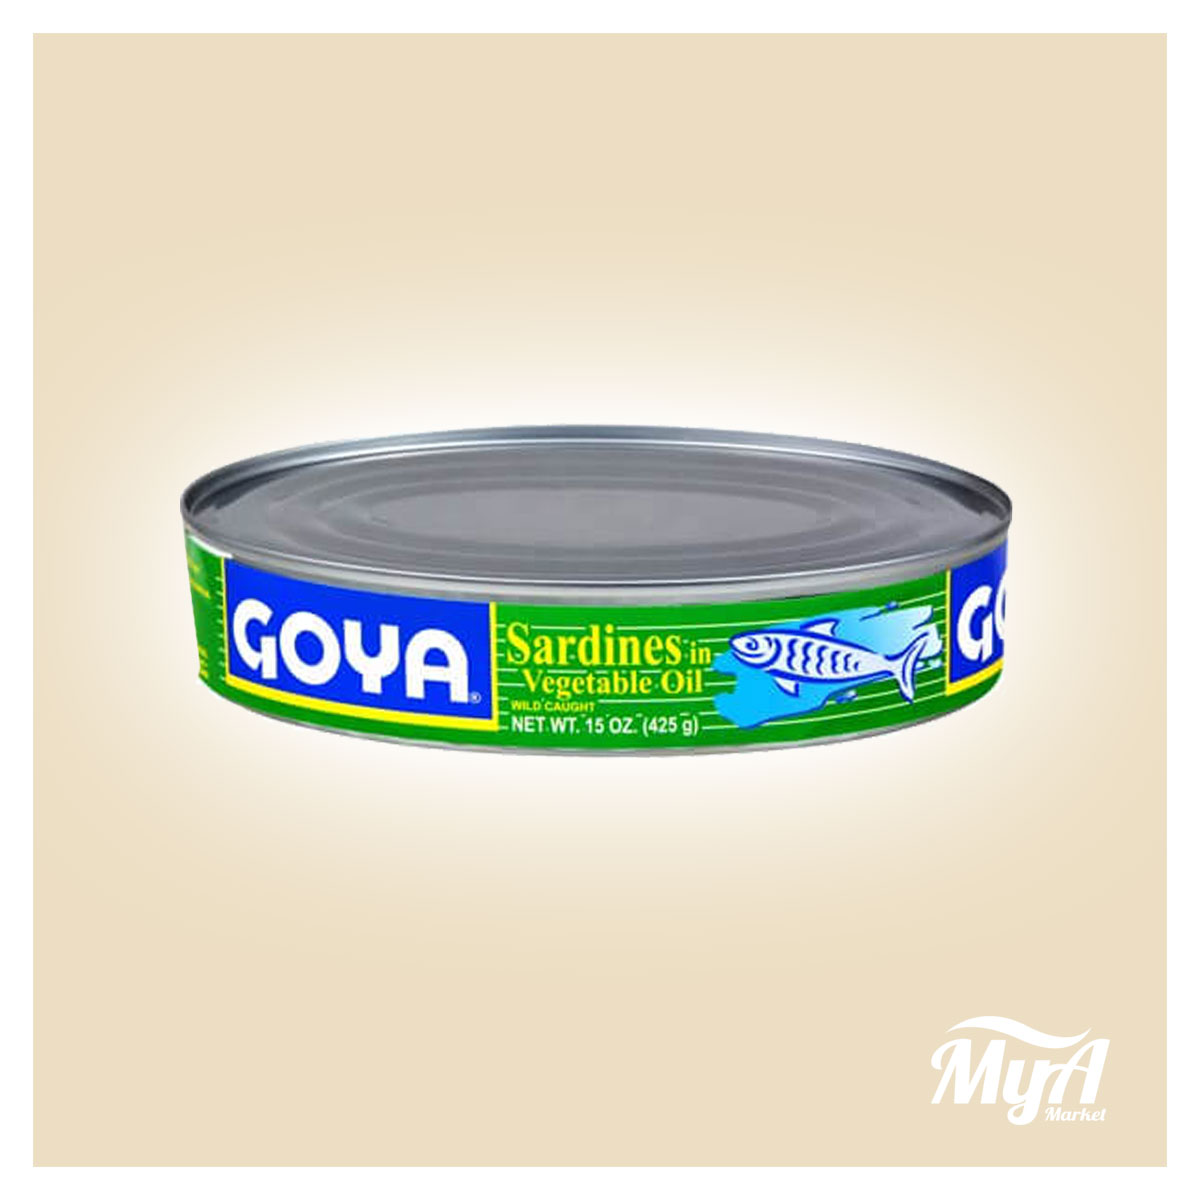 Sardinas en Aceite Vegetal Goya